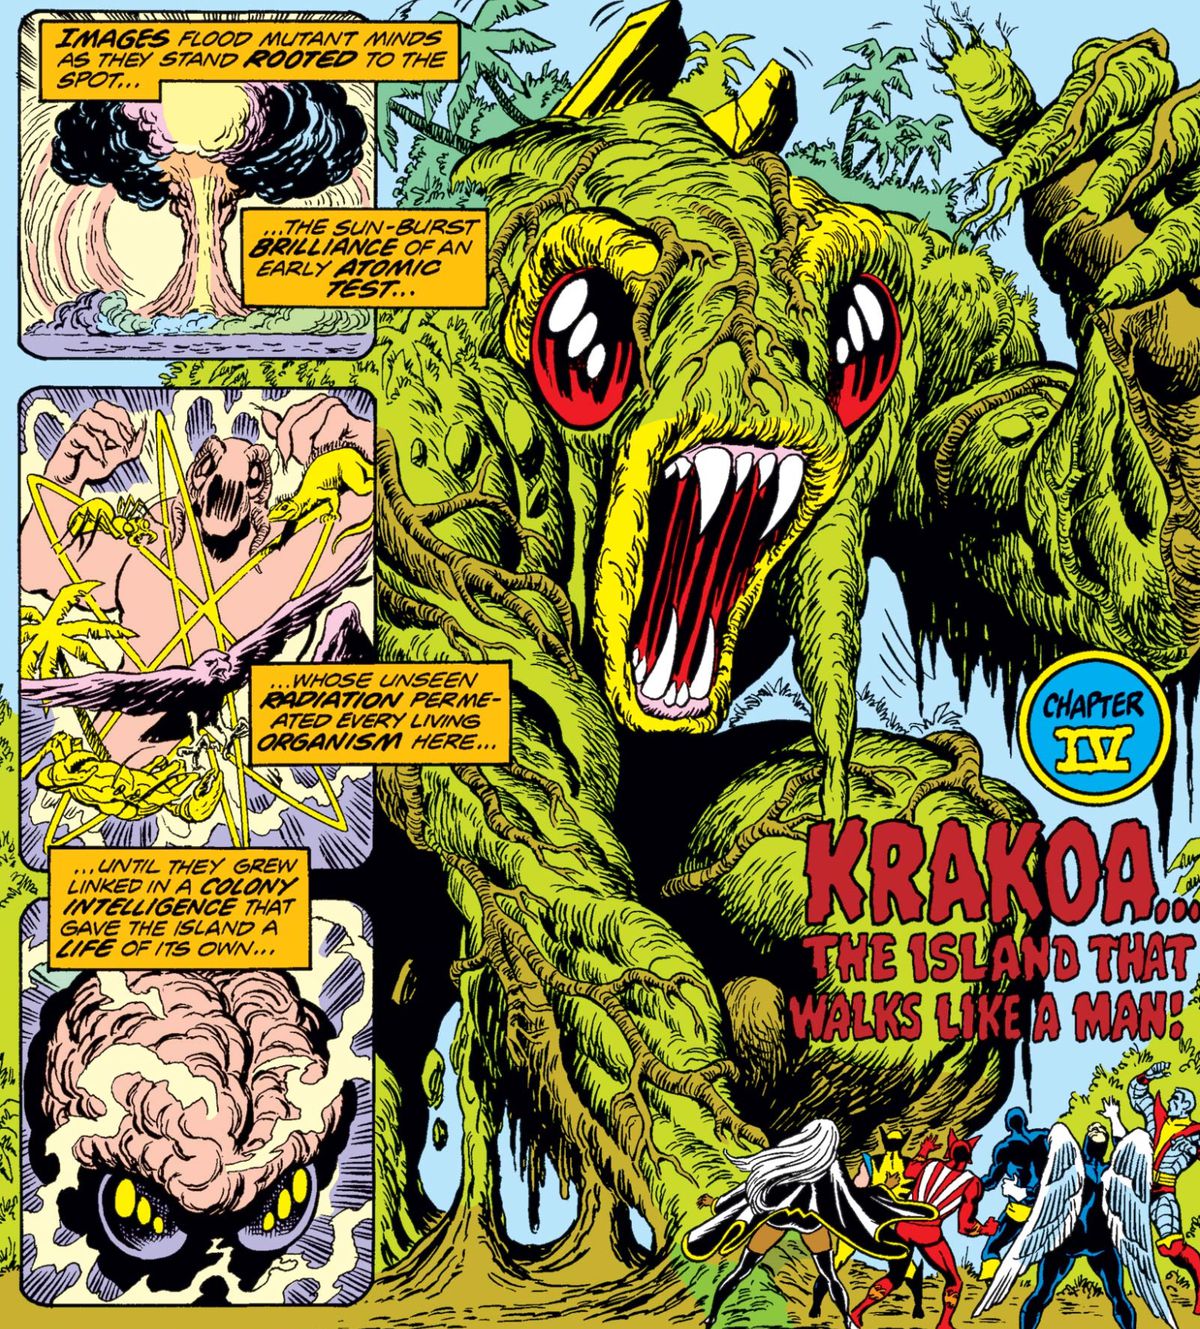 Krakoa, the mutant sentient island, in Giant-Size X-Men #1, Marvel Comics (1975).